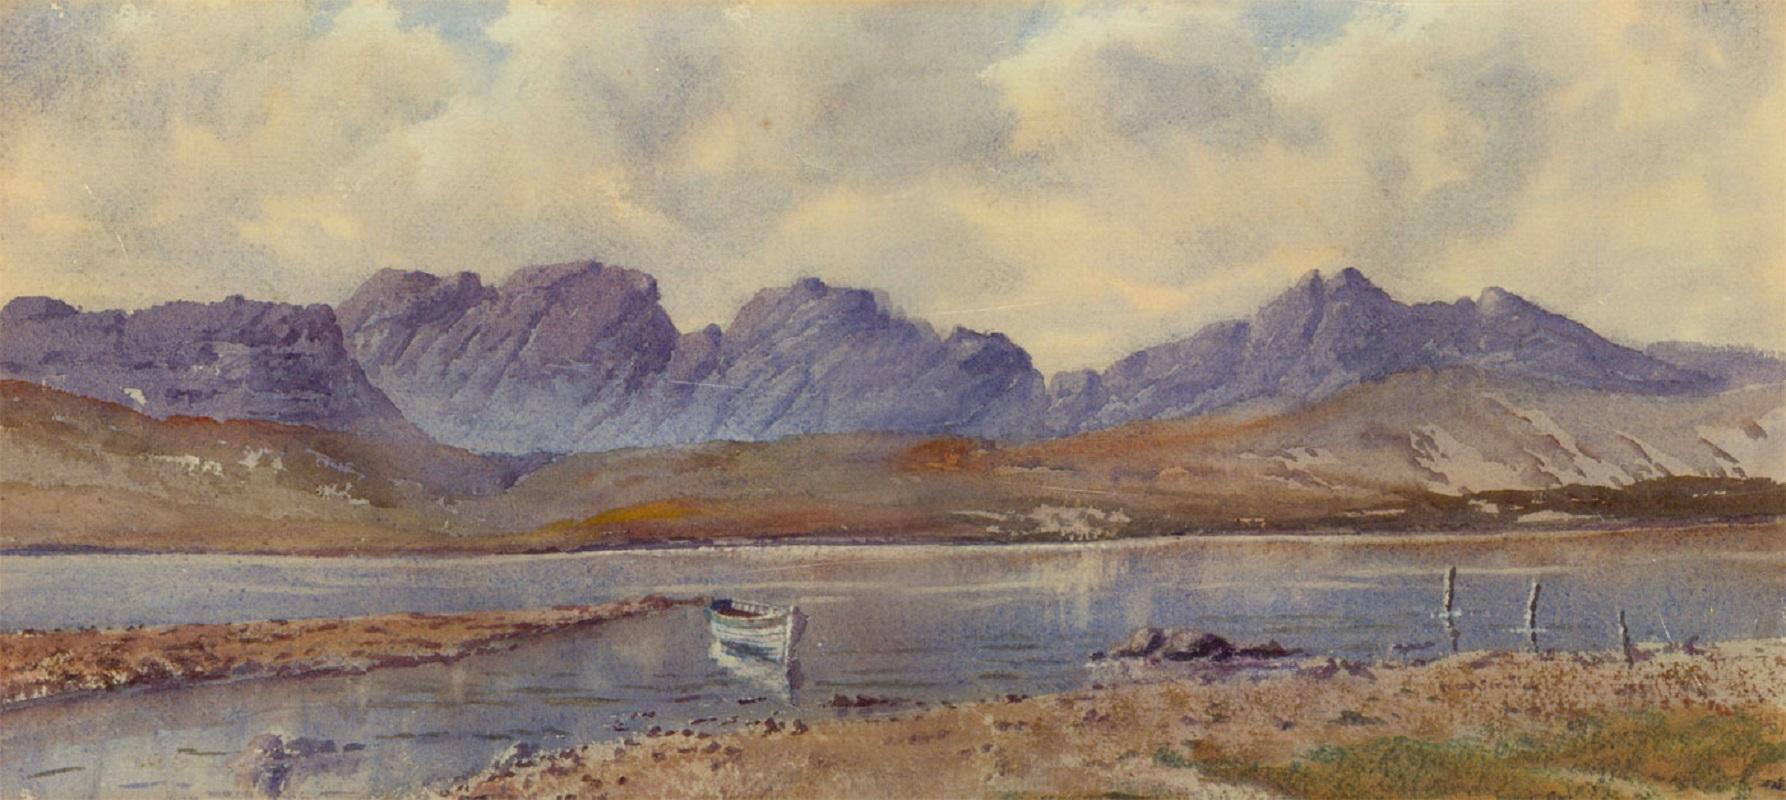 Framed 20th Century Watercolour - Scottish Loch - Art by Unknown